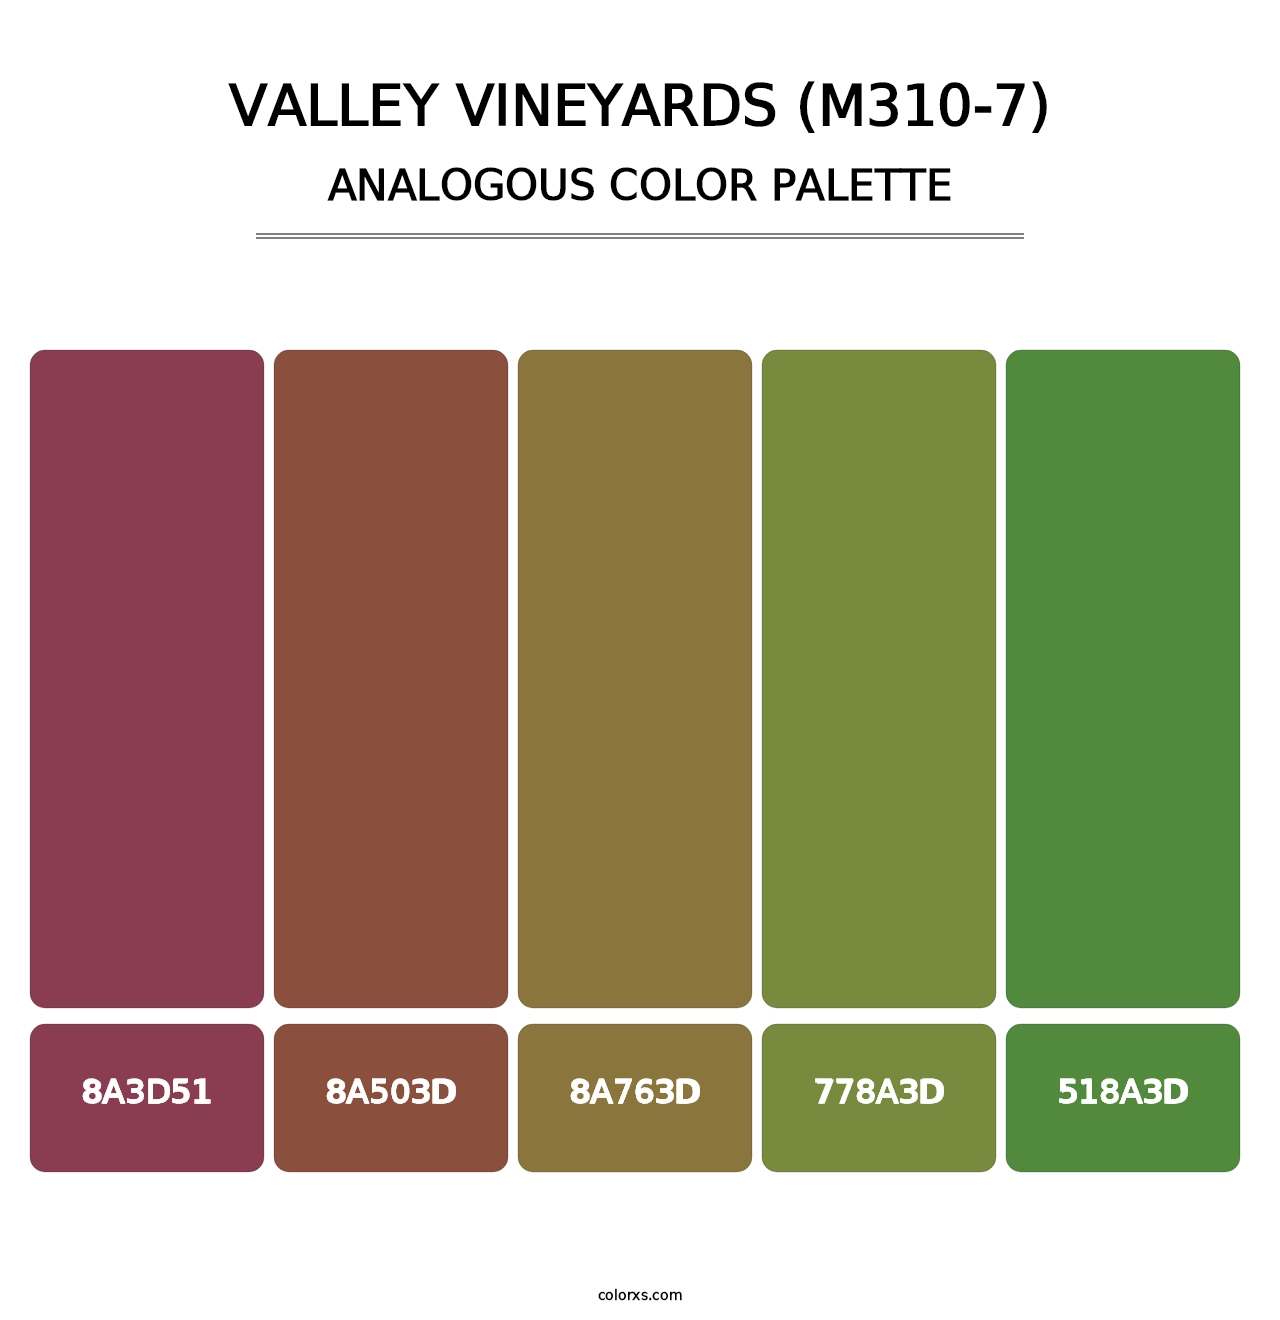 Valley Vineyards (M310-7) - Analogous Color Palette